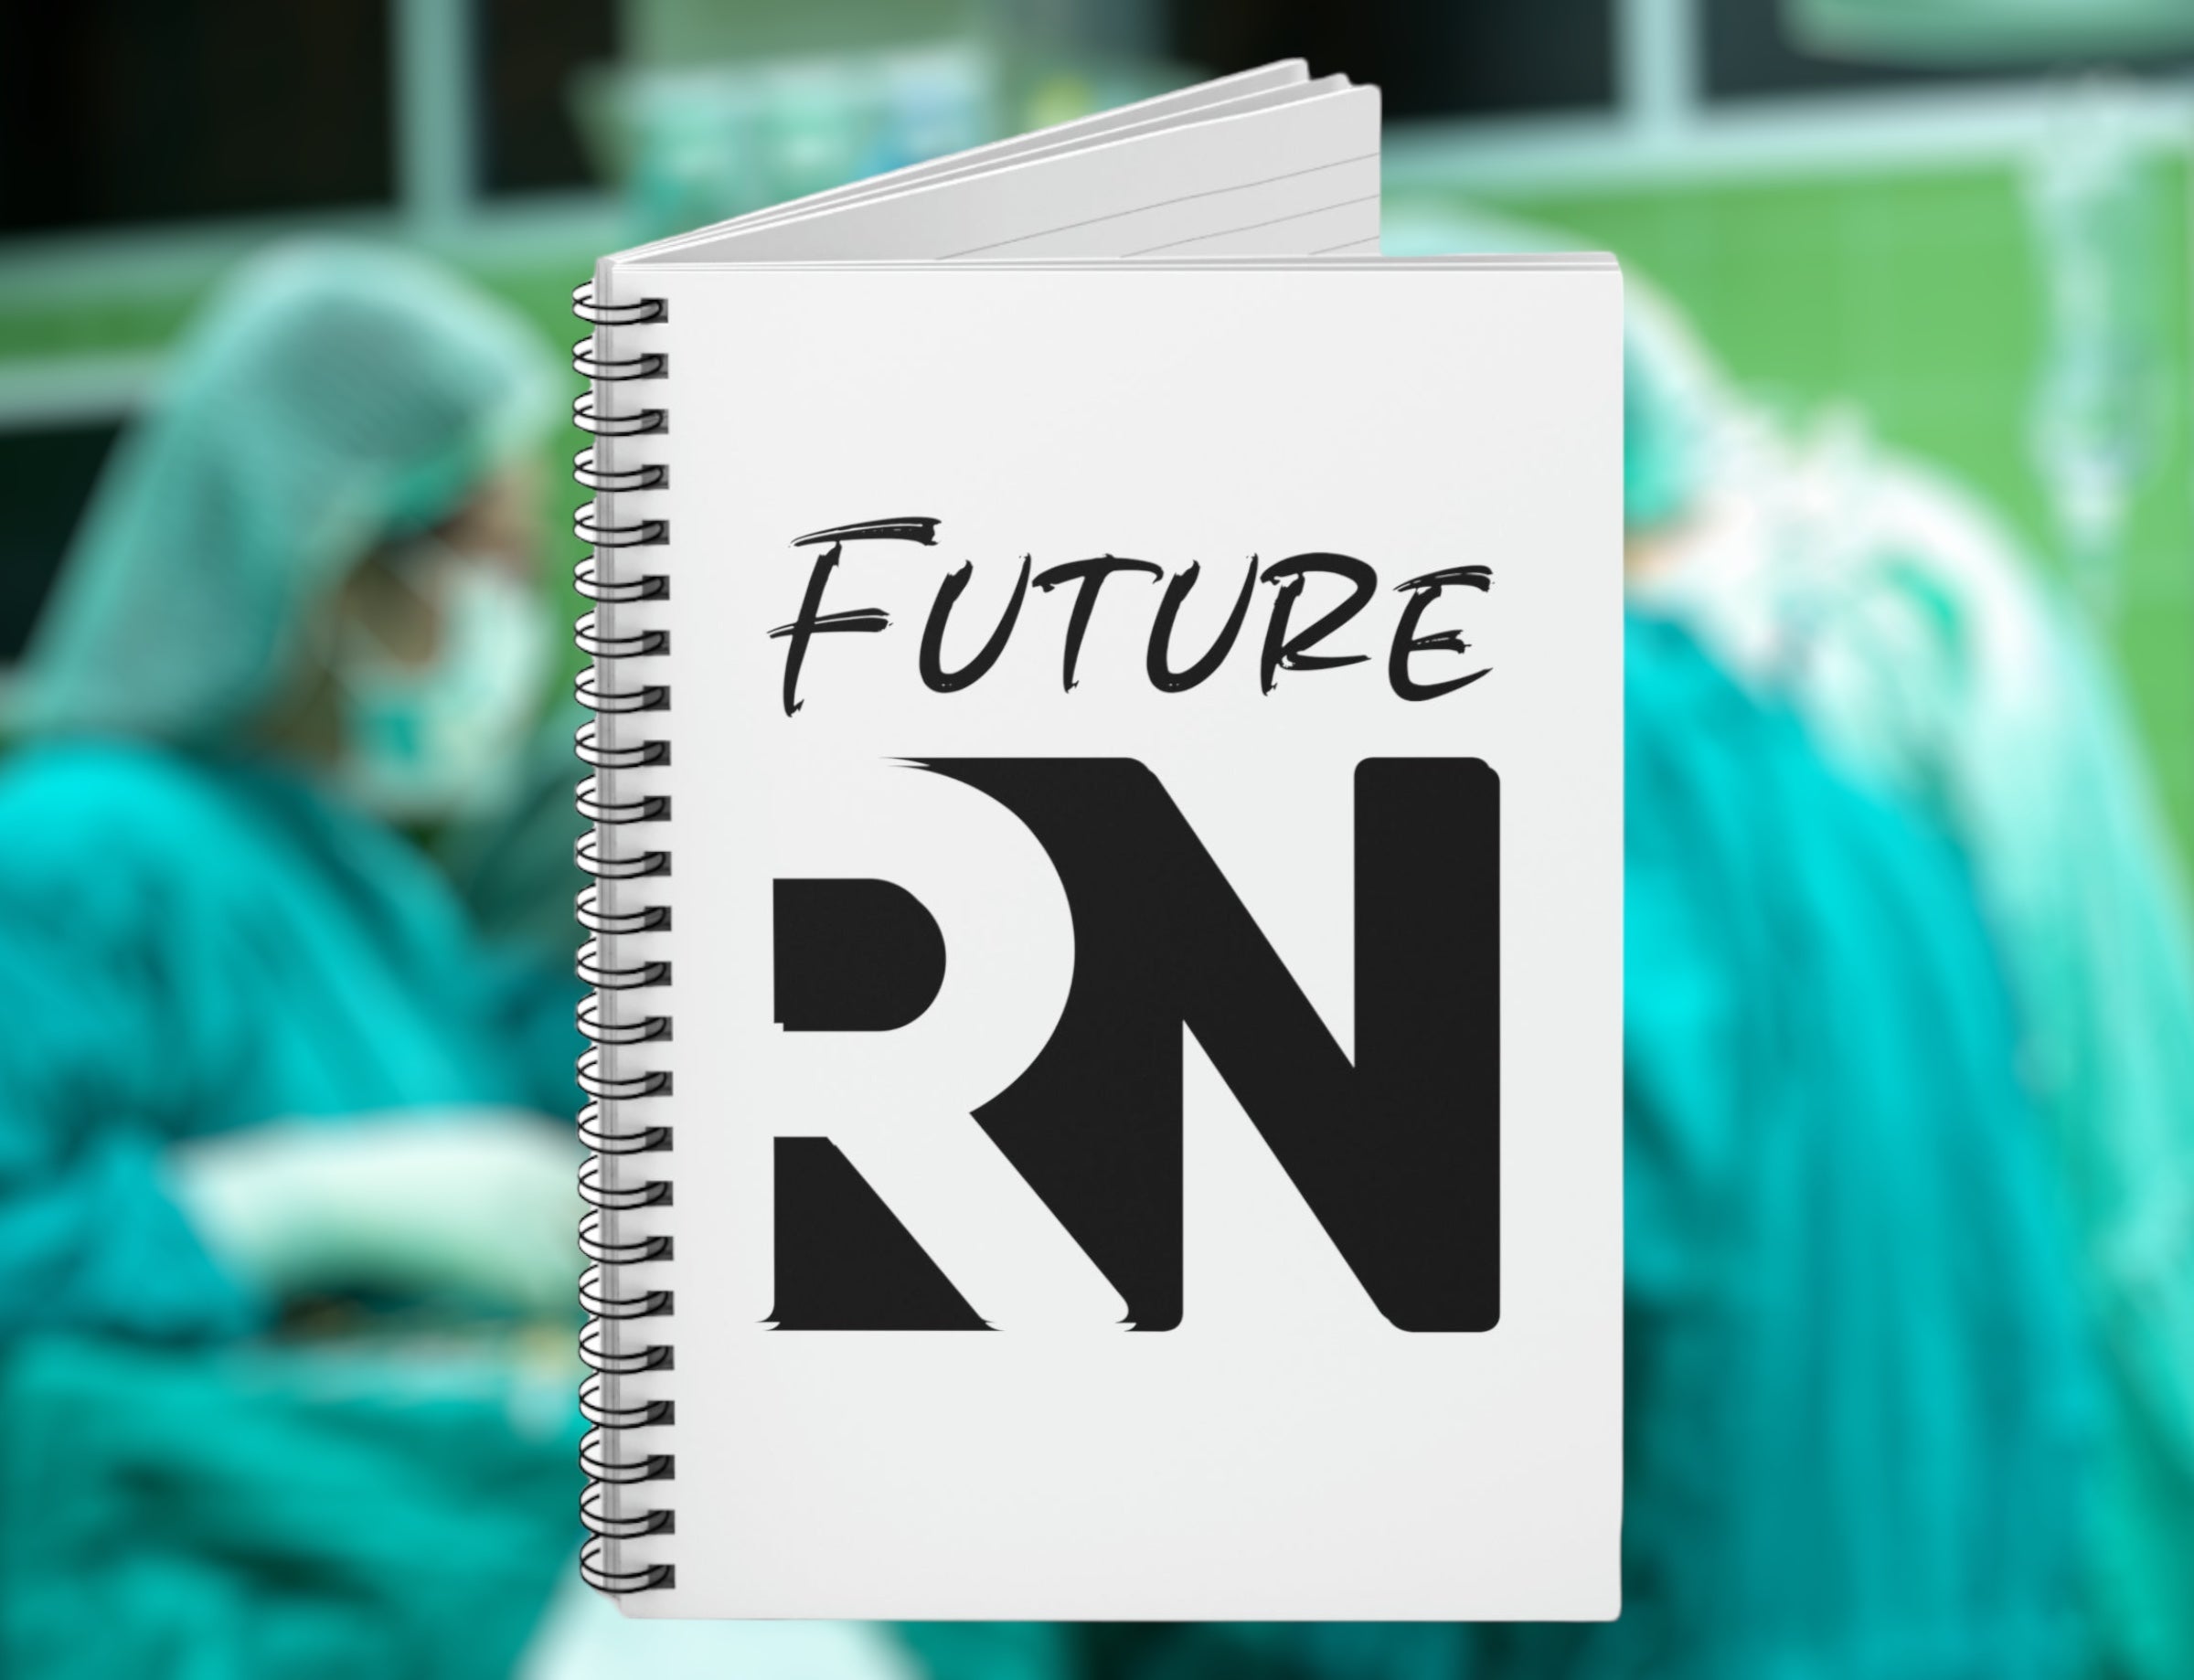 future rn symbol